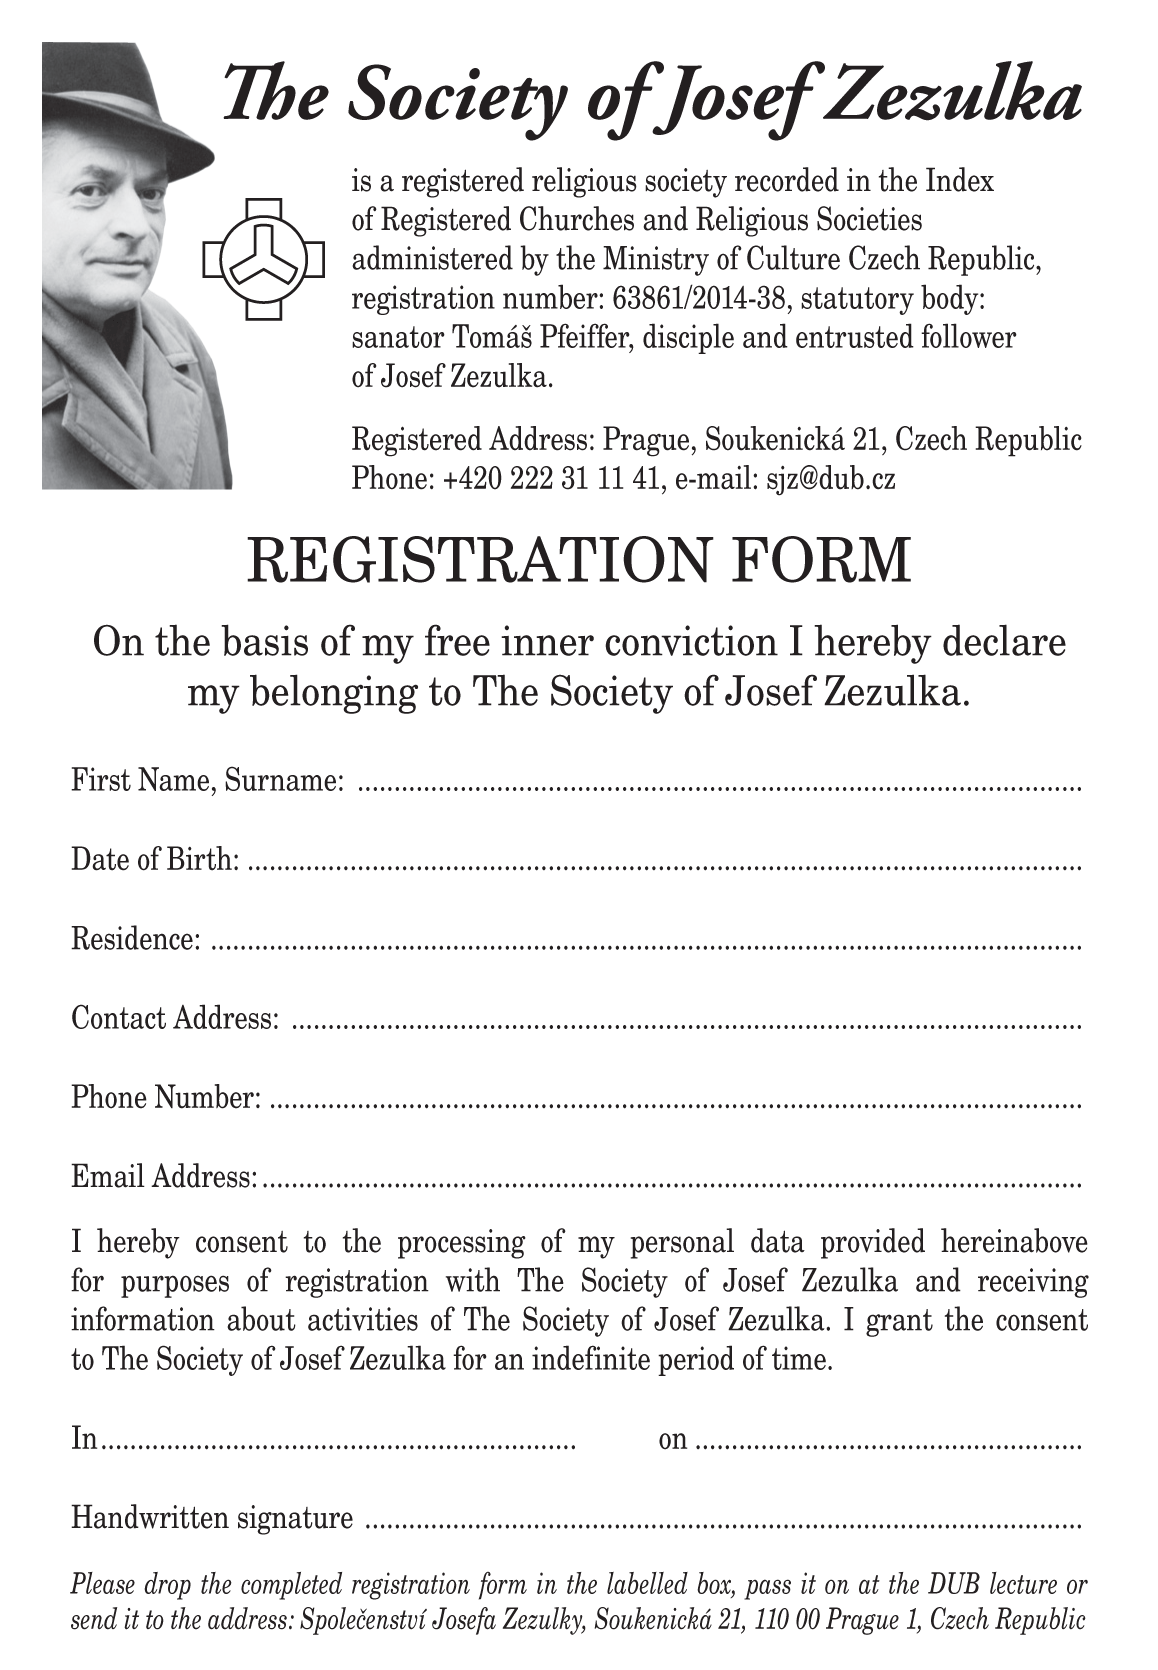 Registration form - The Society of Josef Zezulky